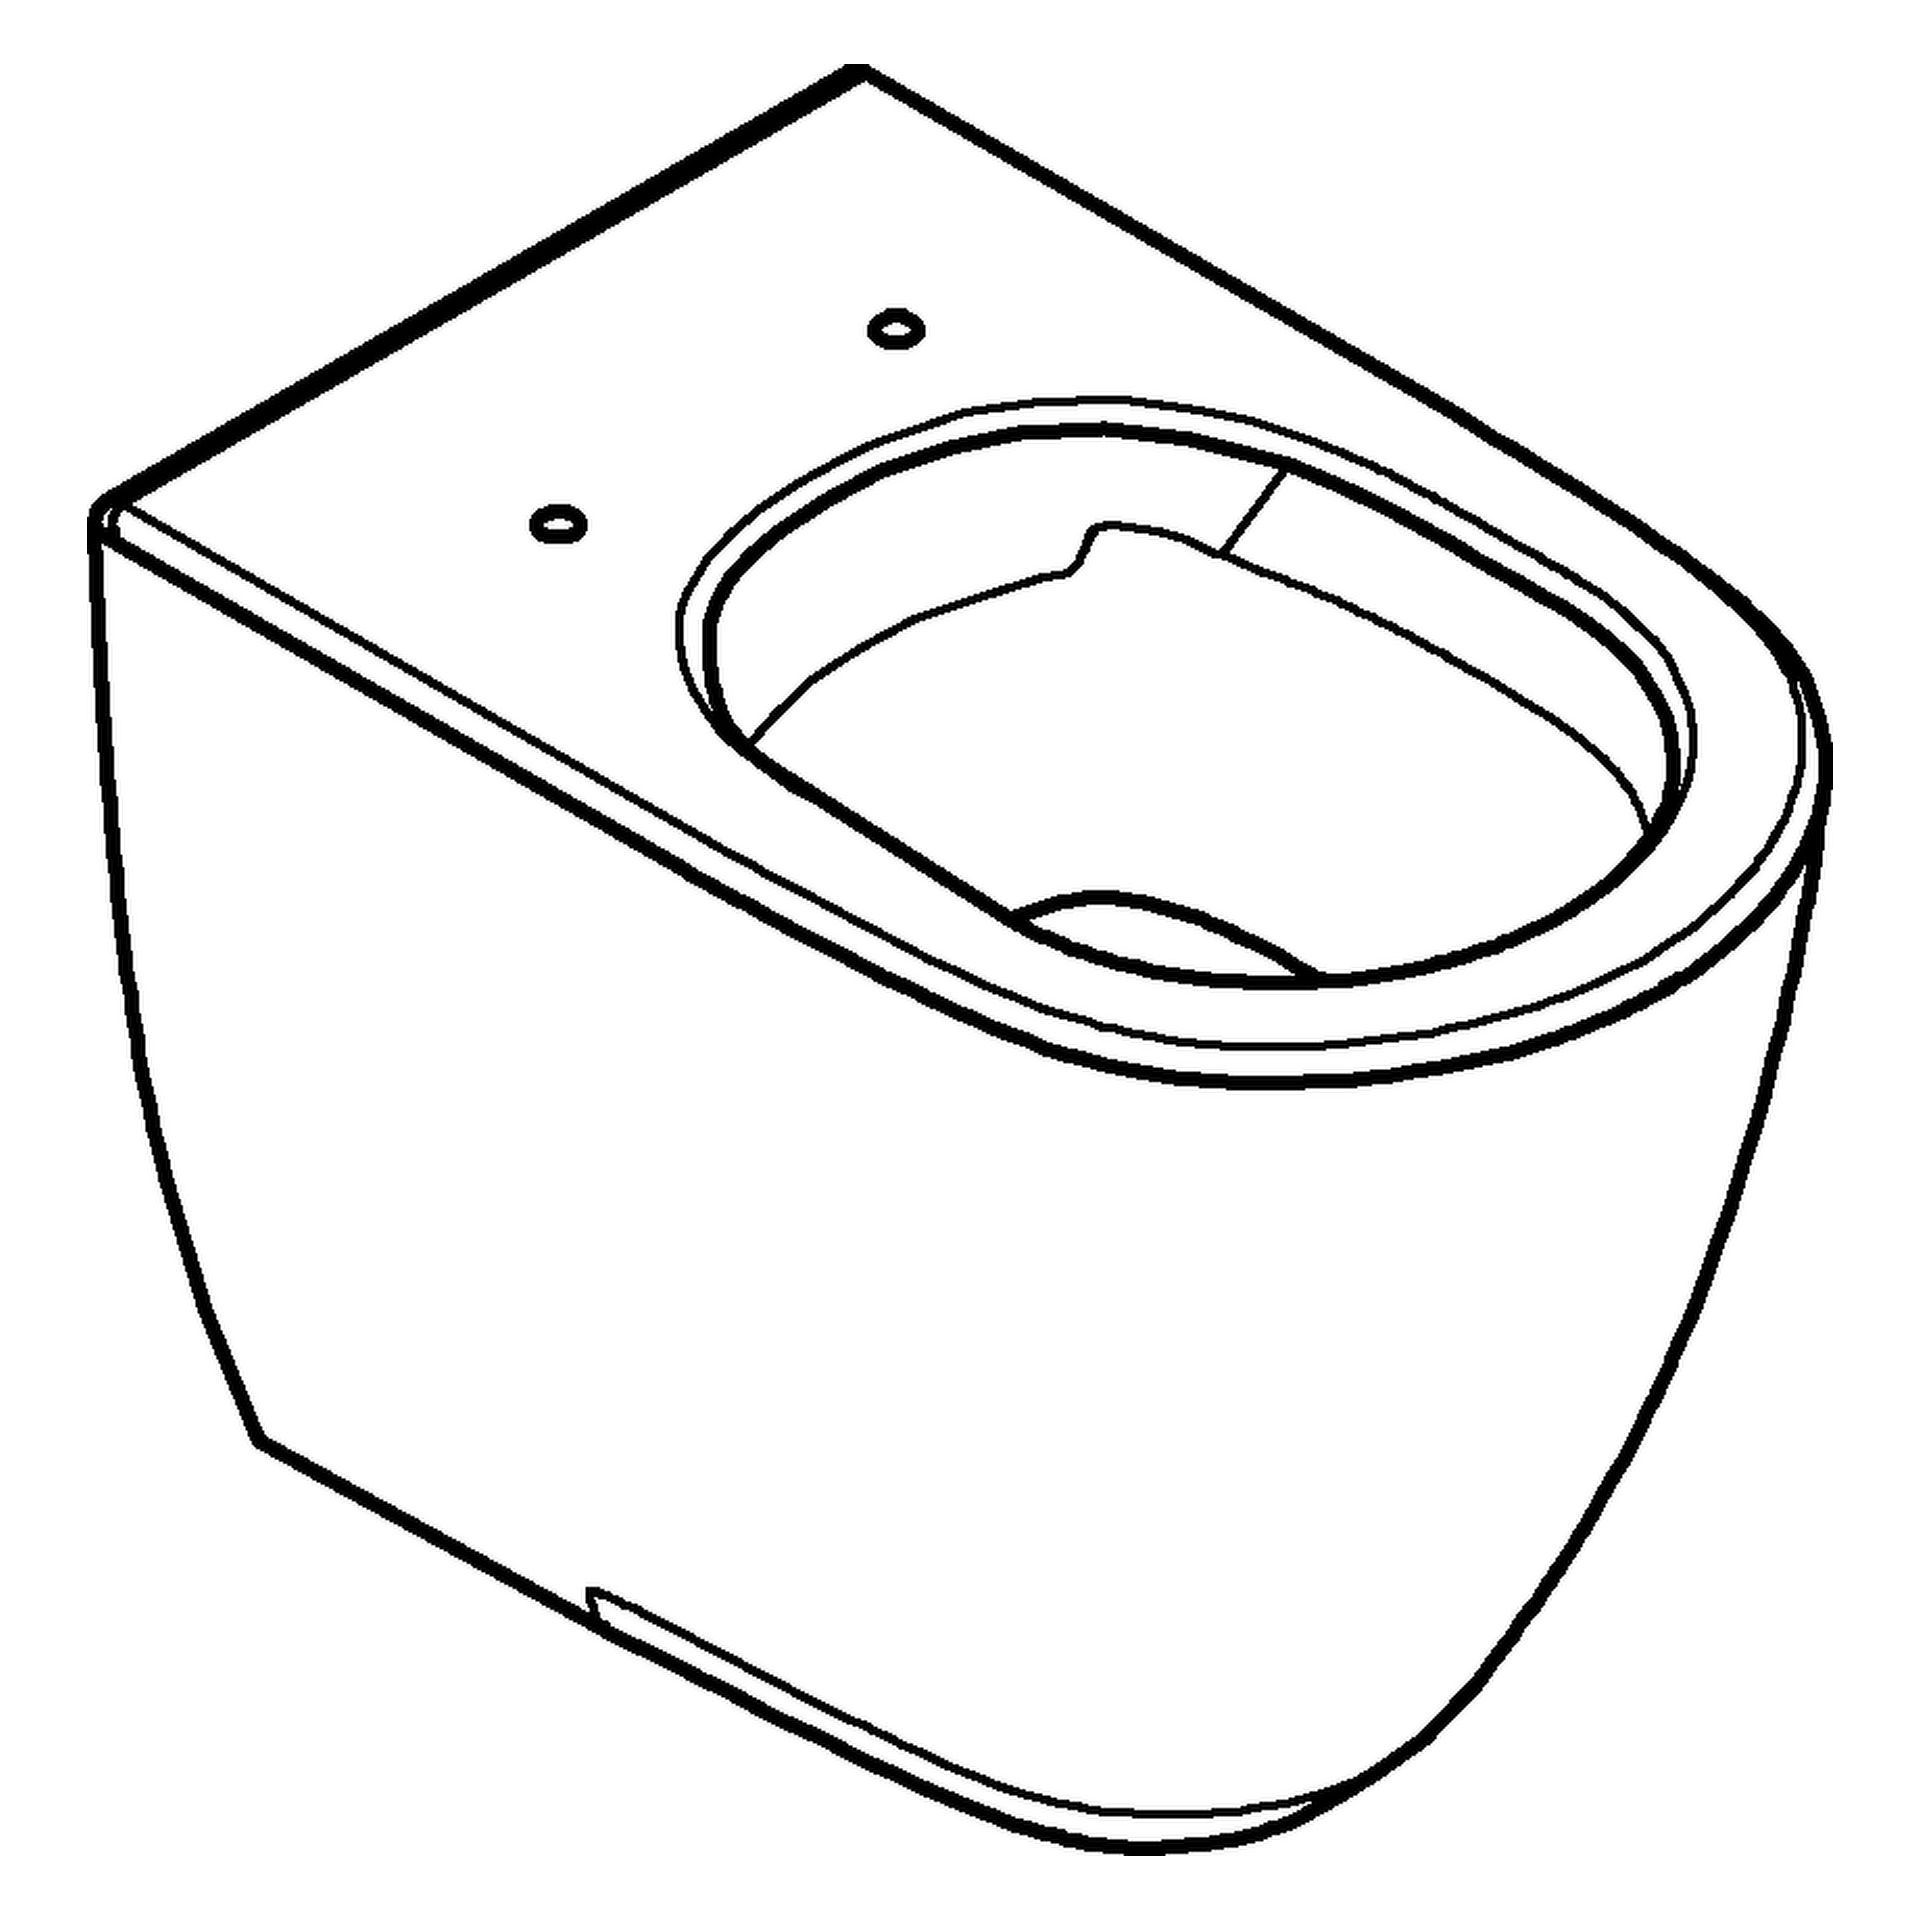 Stand-Tiefspül-WC Essence 39573_H, Abgang universal, back to wall, für Unterputz-Spülkasten, spülrandlos, aus Sanitärkeramik, PureGuard Hygieneoberfläche, alpinweiß